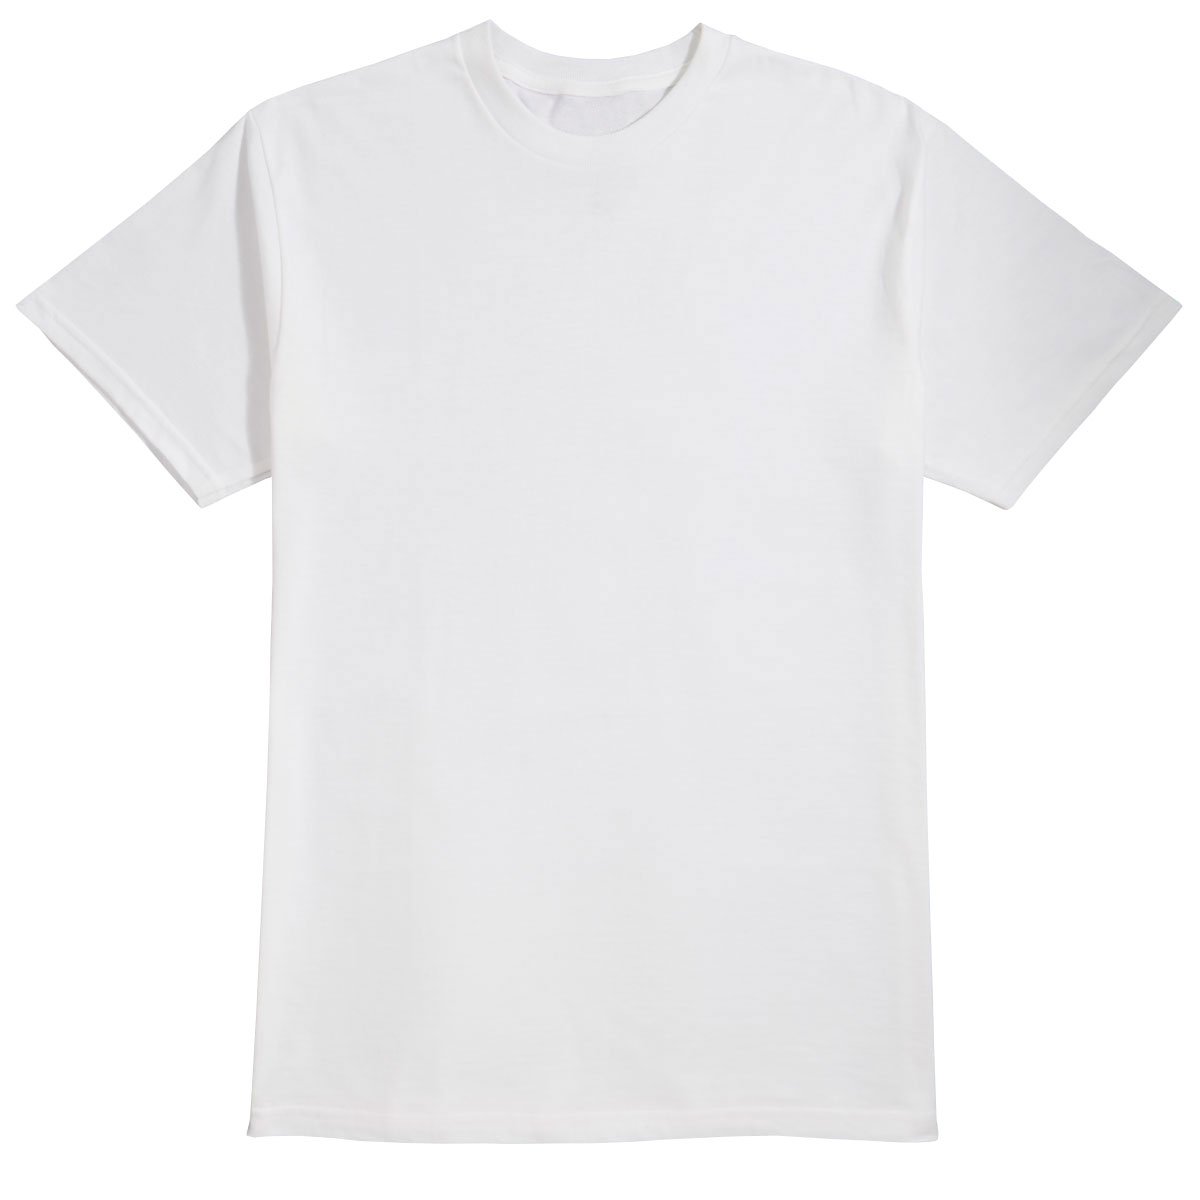 Jay Howell Flash Sheet Customs X T-Shirt image 2